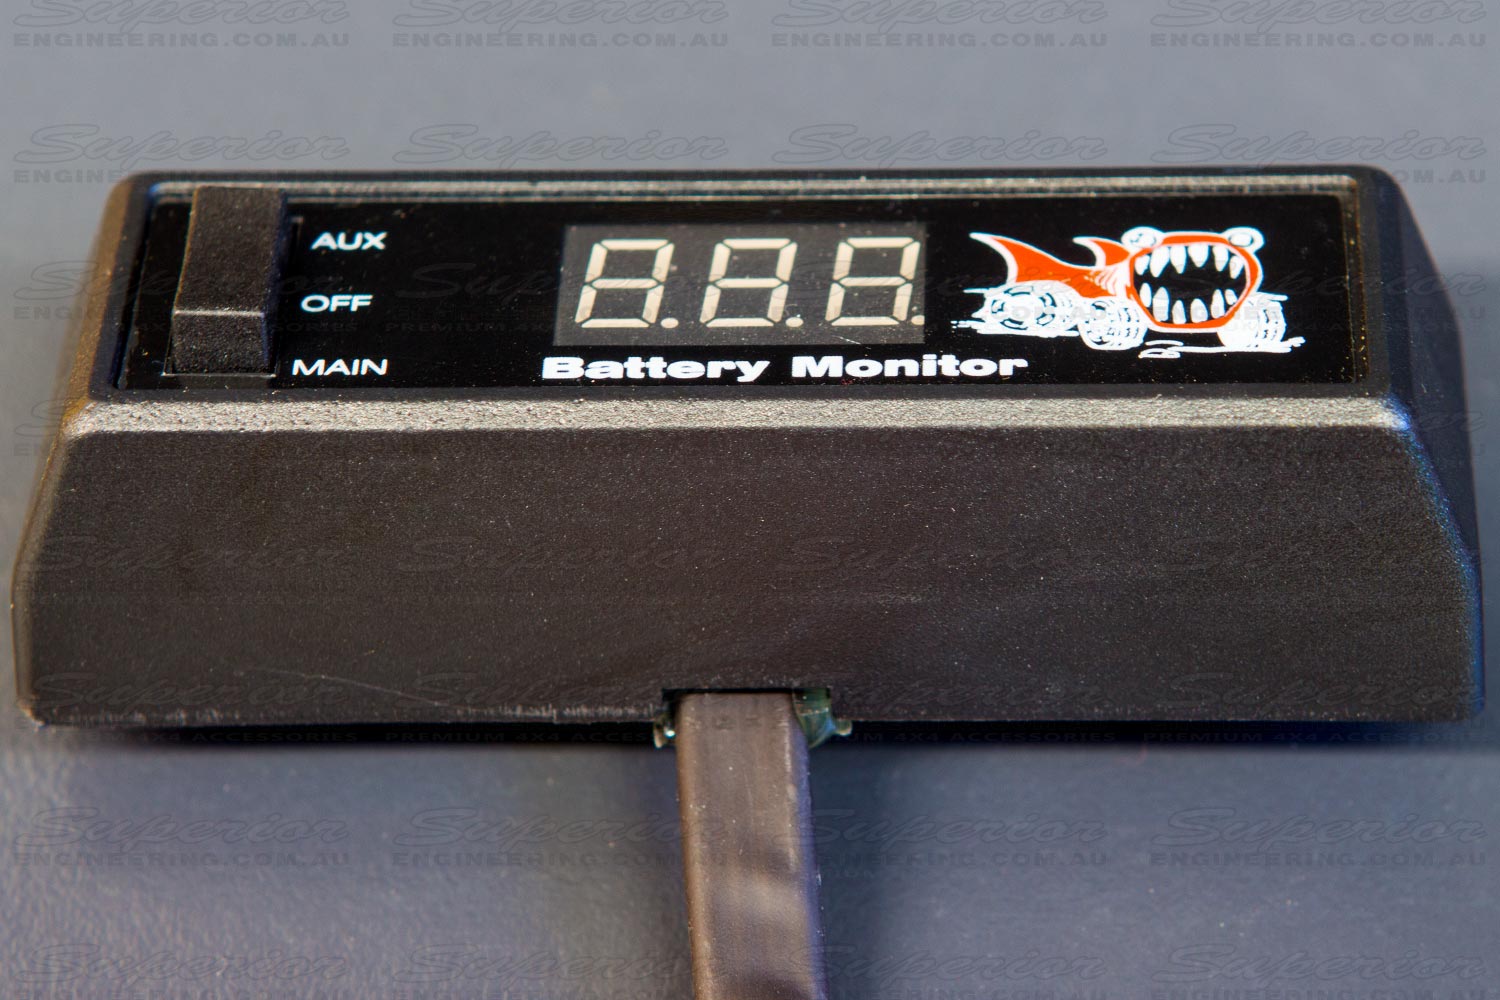 Battery Monitor - Model DBM3D